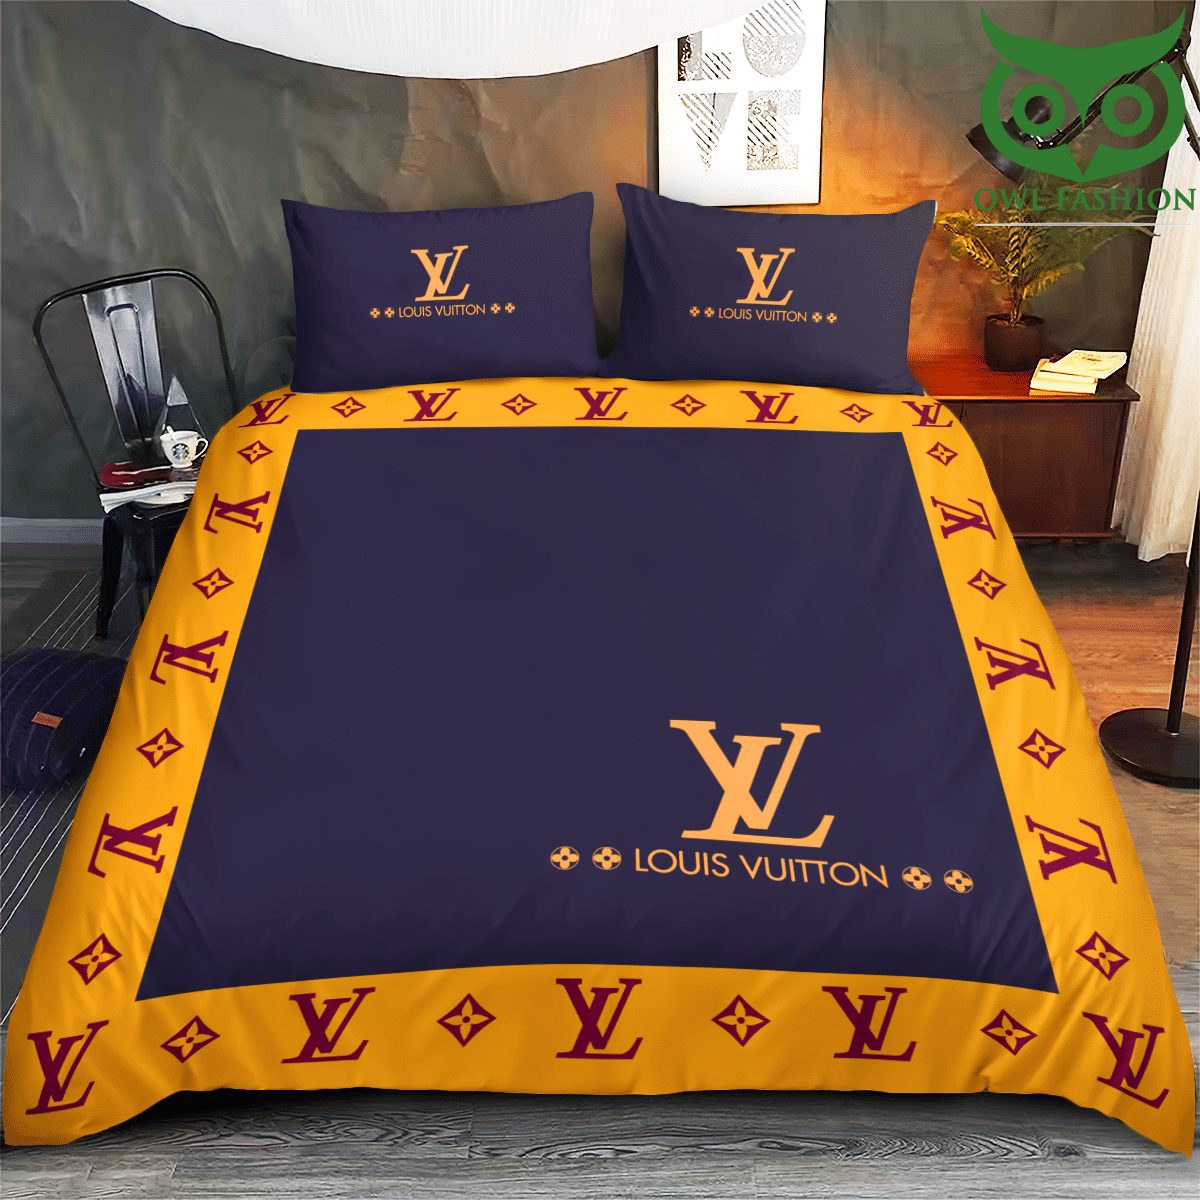 59 Louis Vuitton golden logo on navy tone bedding set